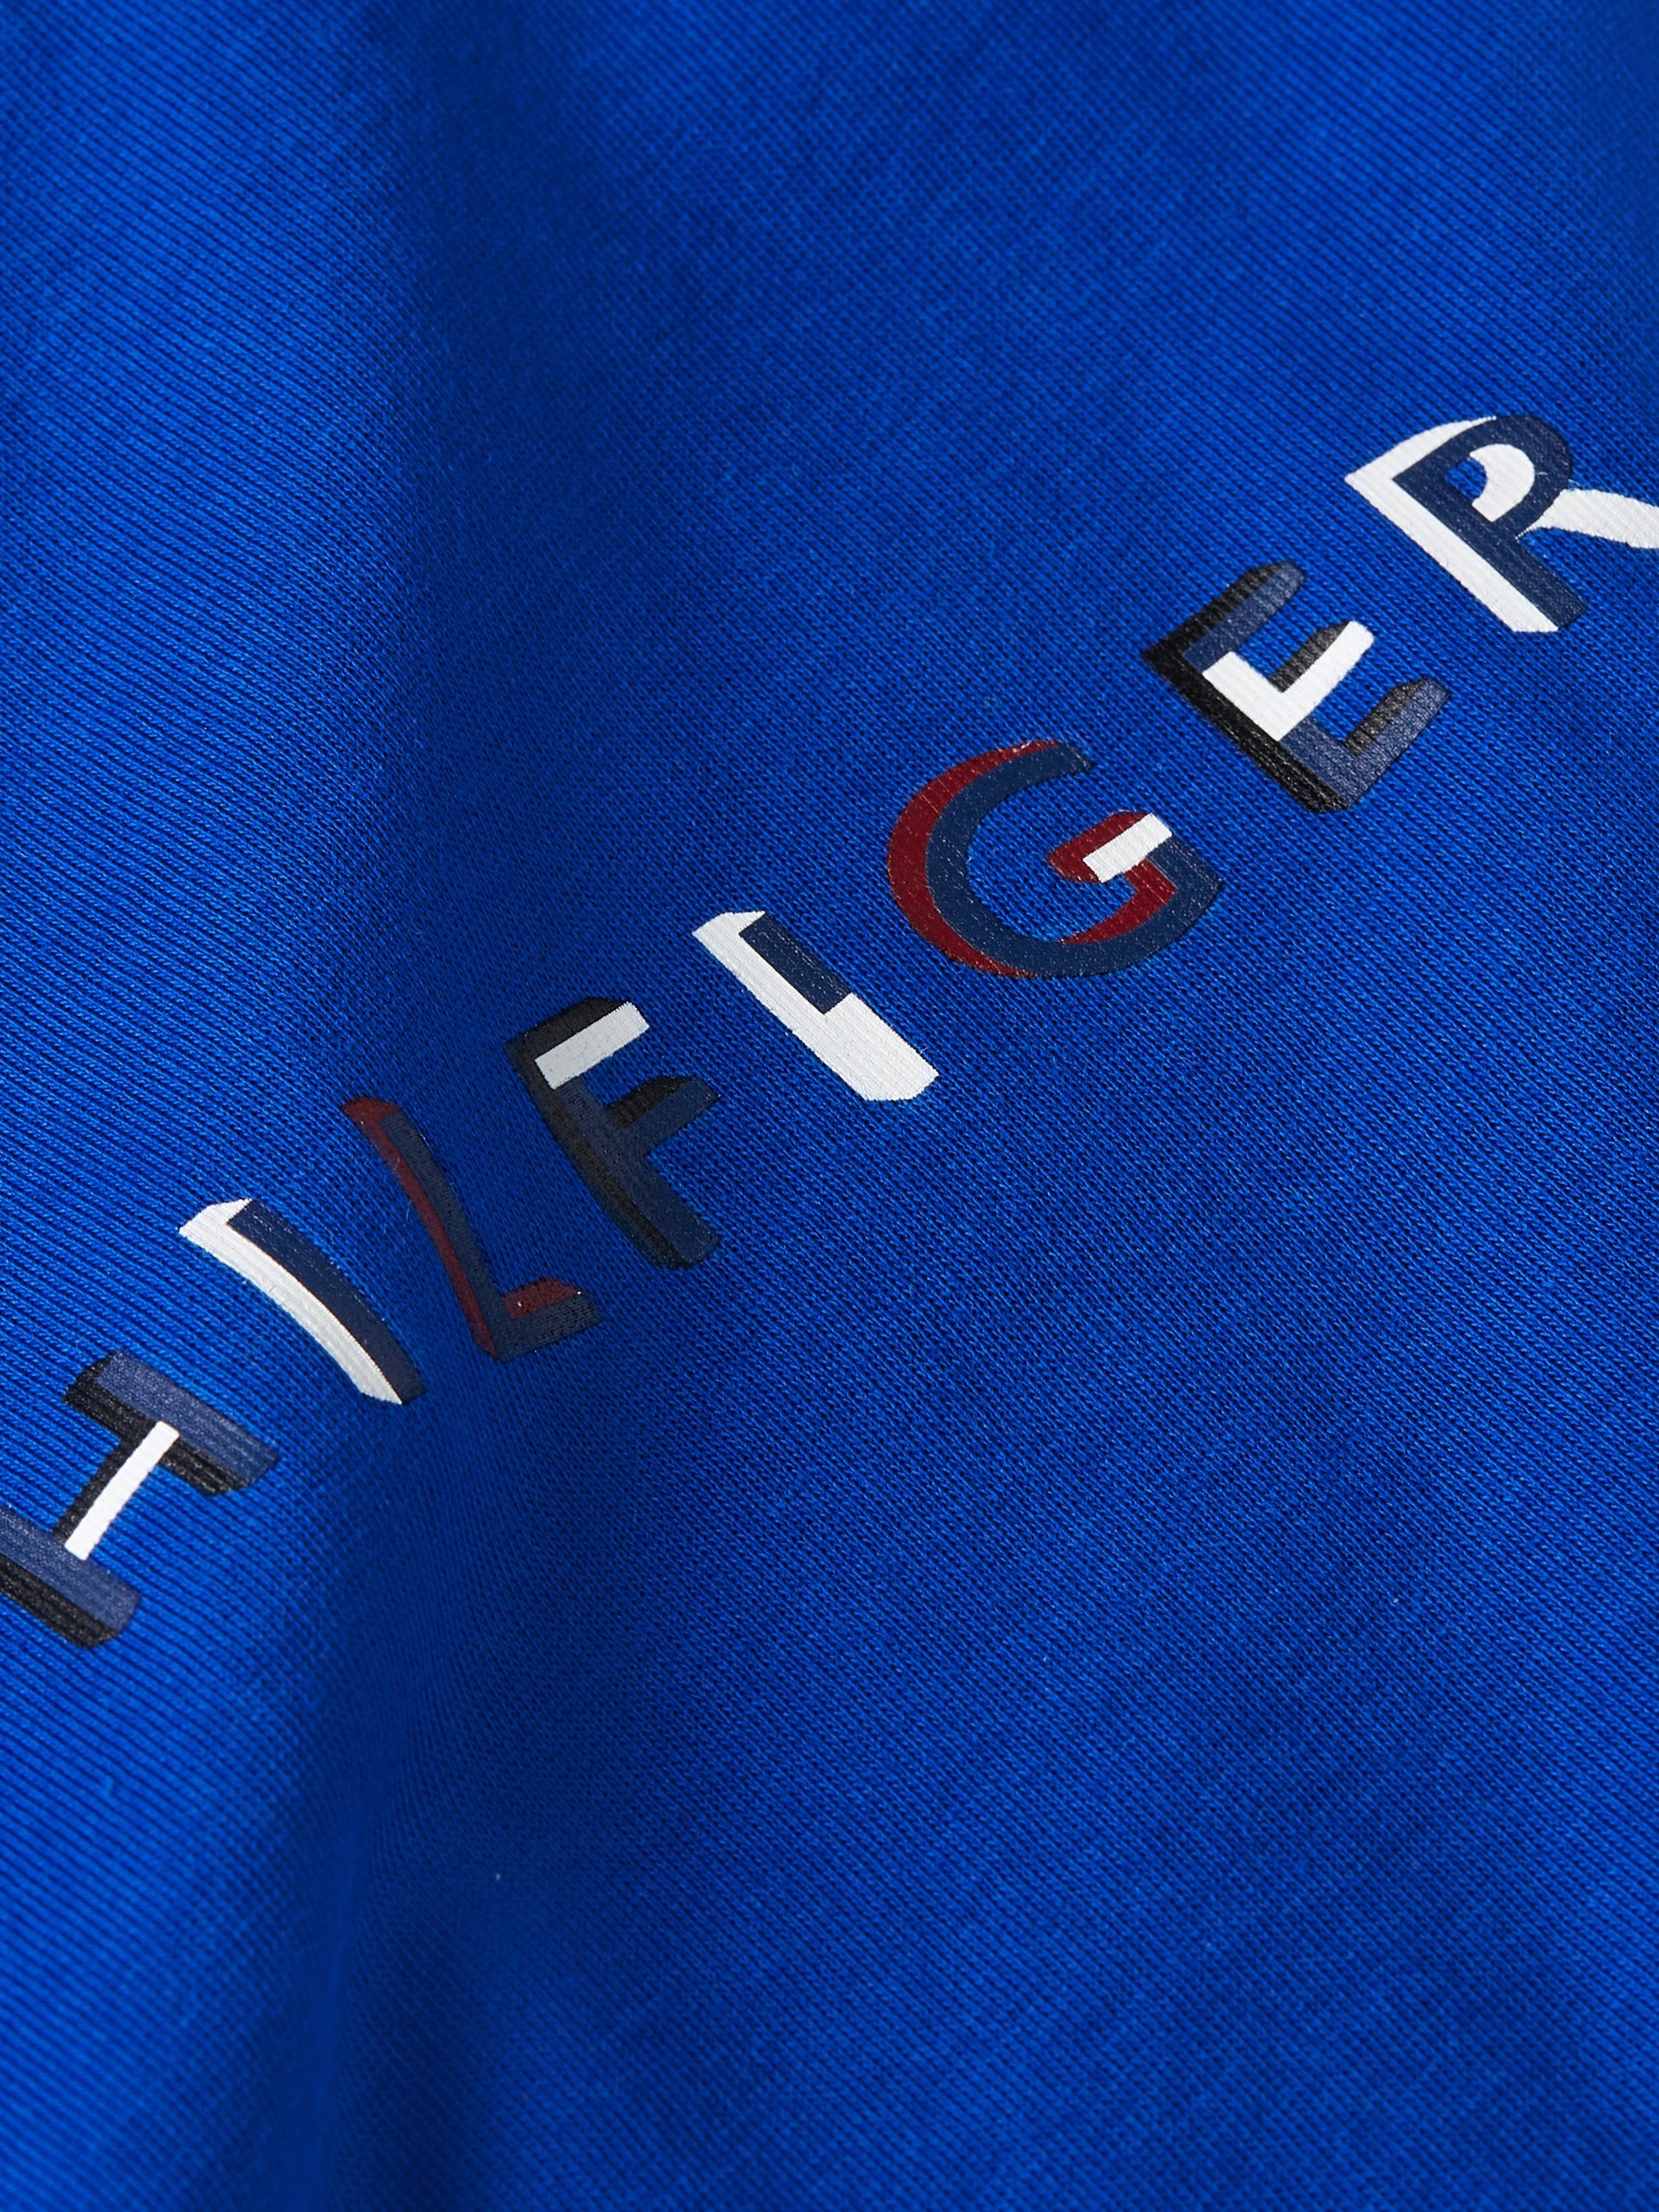 TEE Blue Ultra RWB Hilfiger HILFIGER Tommy T-Shirt